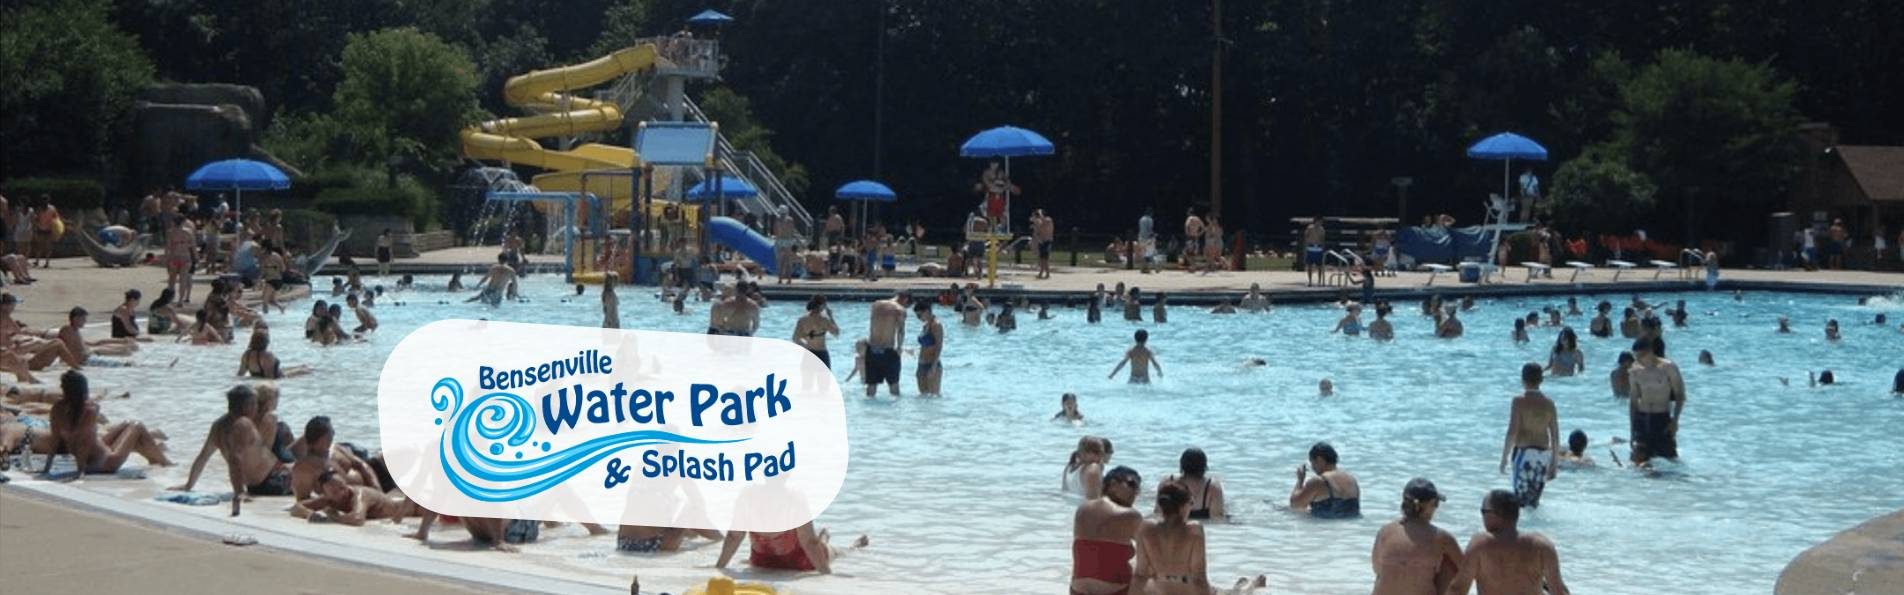 Bensenville Water Park & Splash Pad.